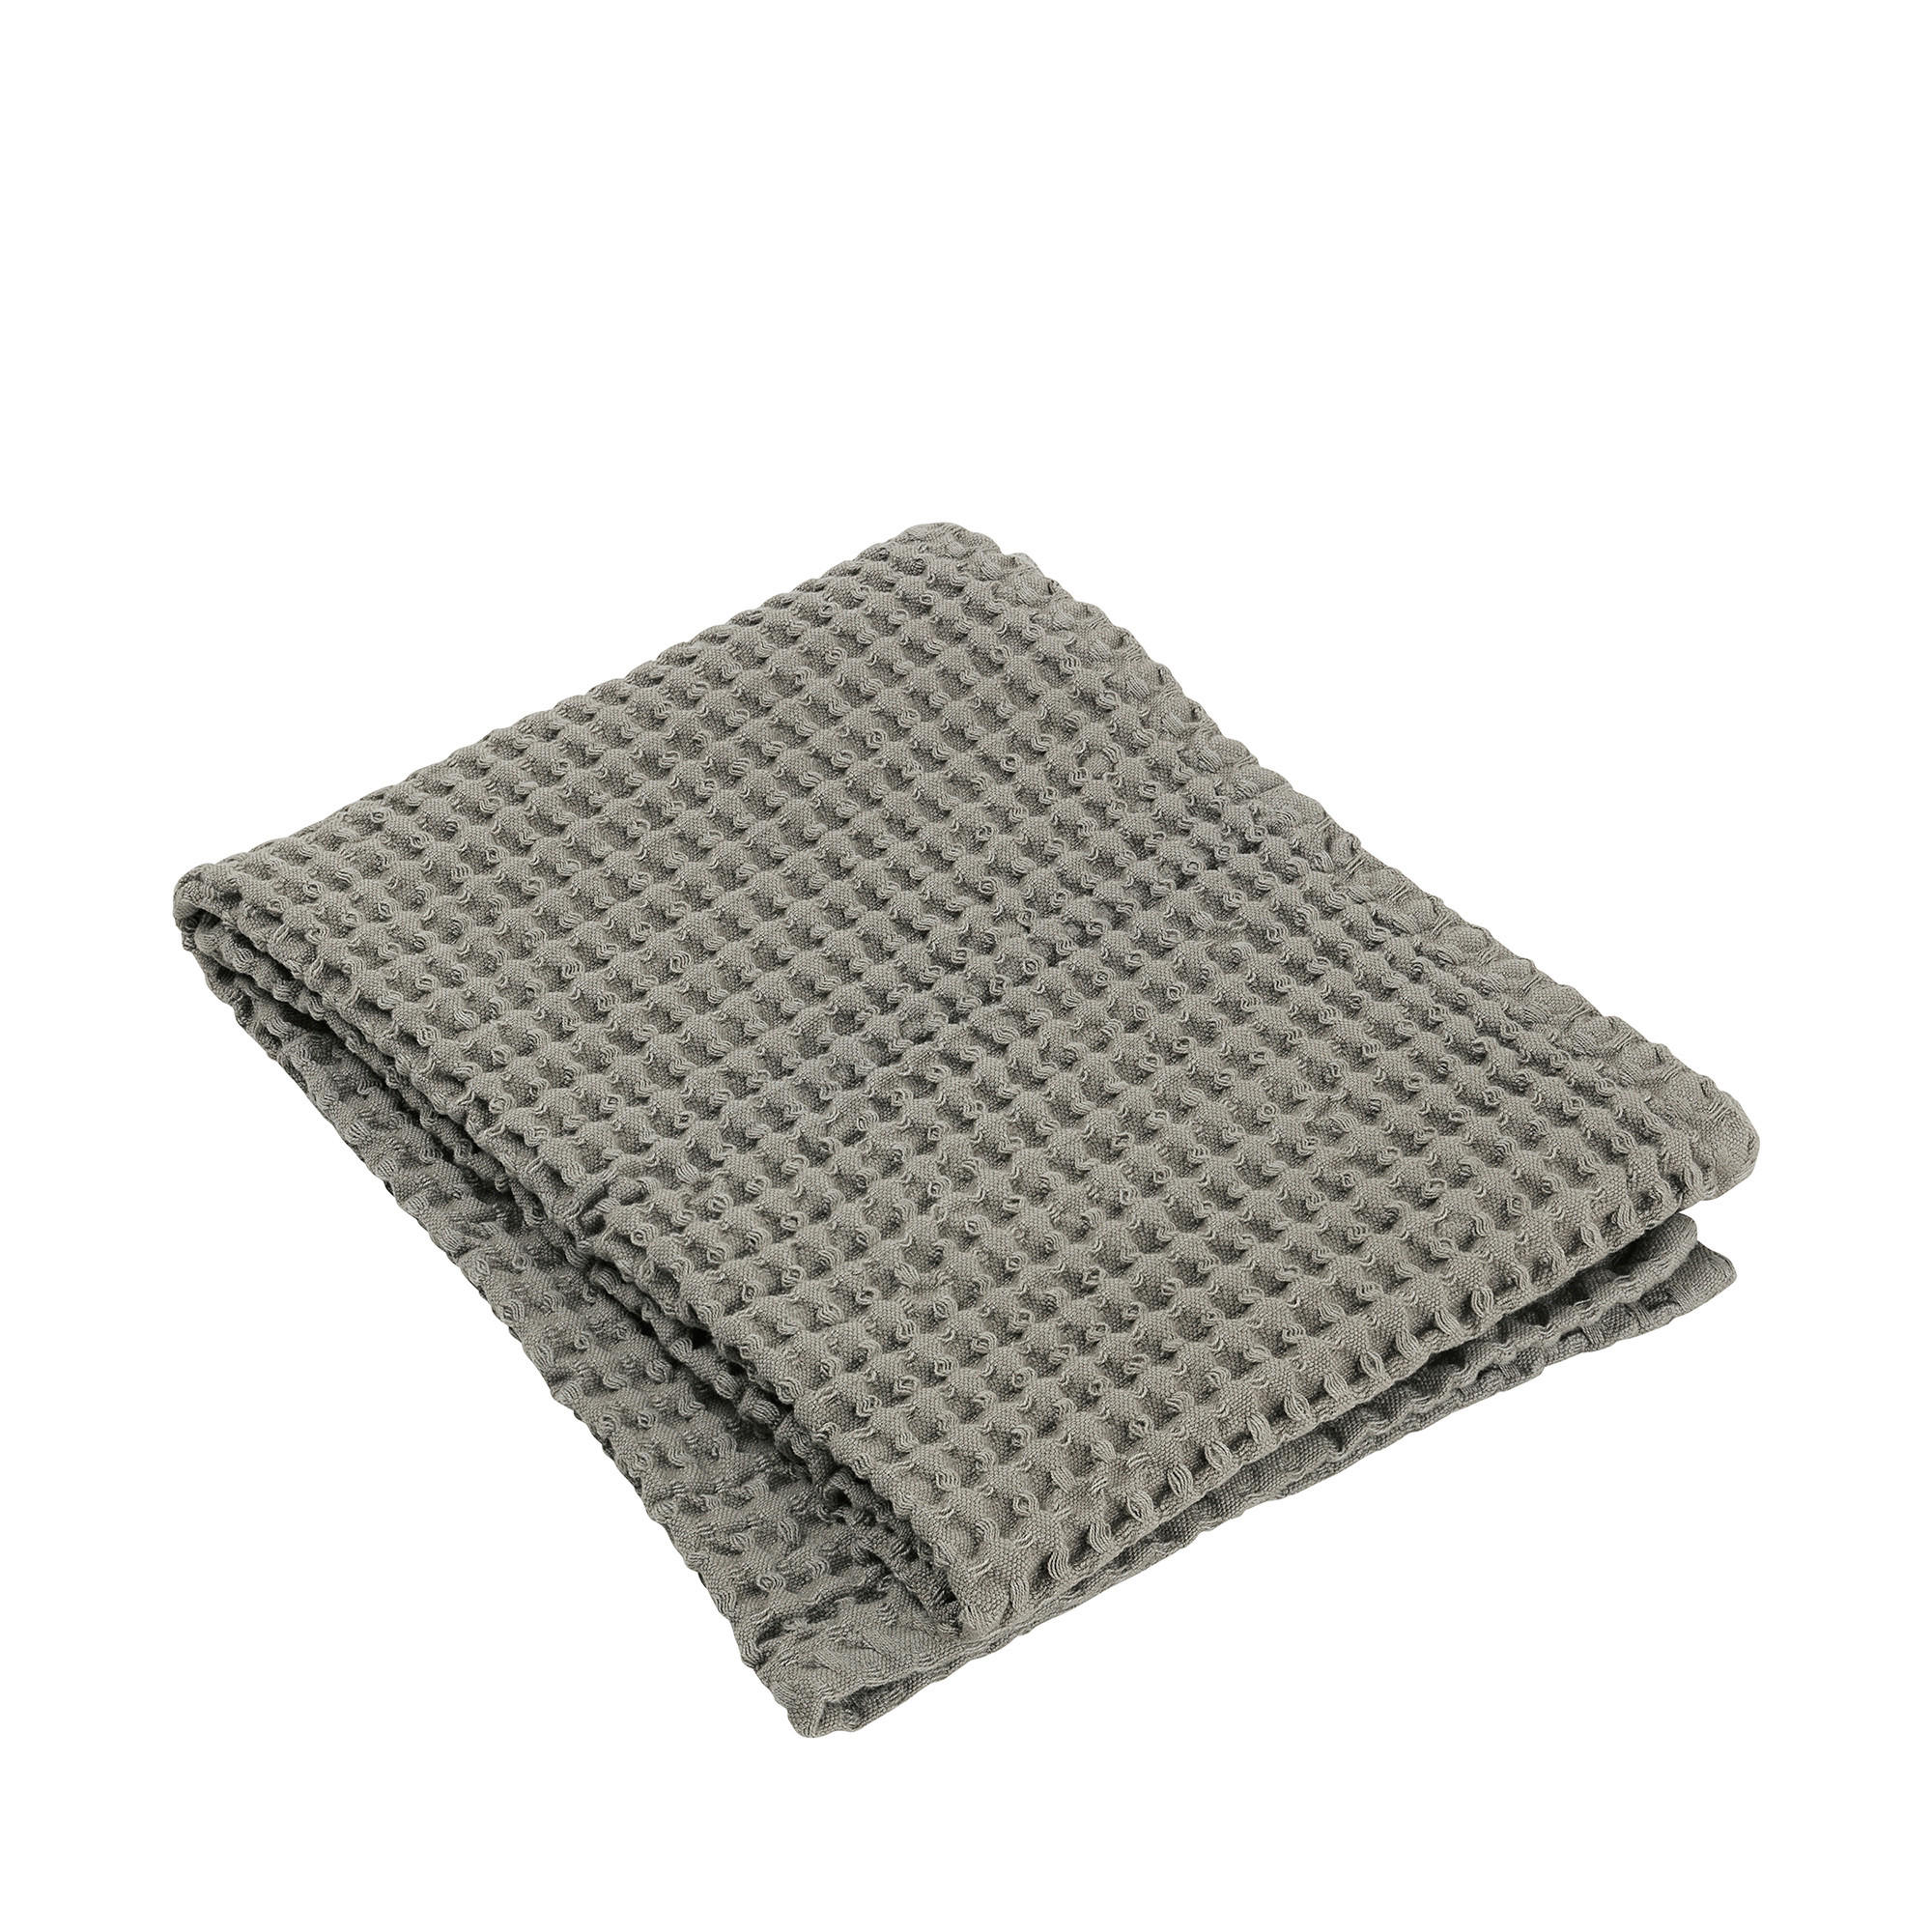 HANDTUCH CARO  - Taupe, Design, Textil (100,0/50,0cm) - Blomus